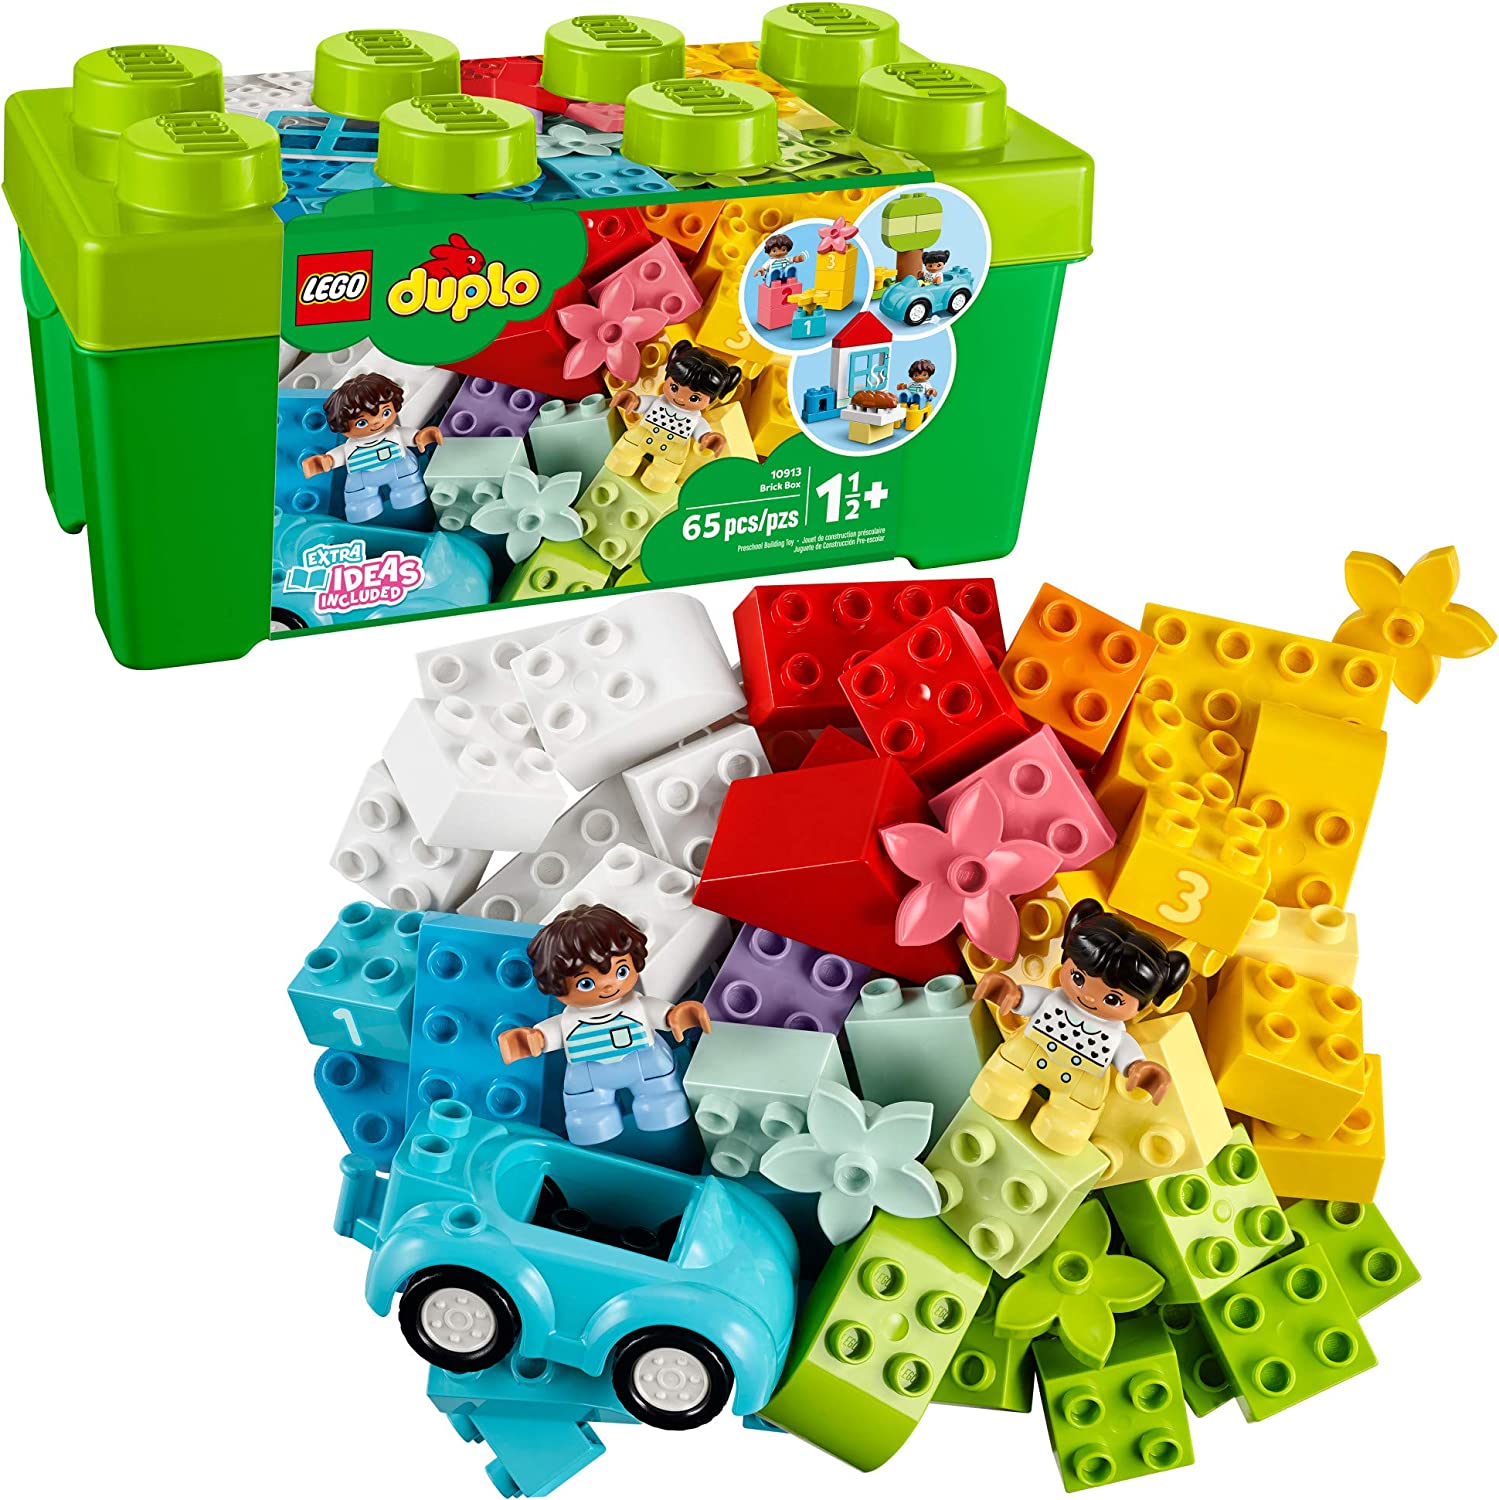 LEGO DUPLO Classic Brick Box First LEGO Set with Storage Box 10913